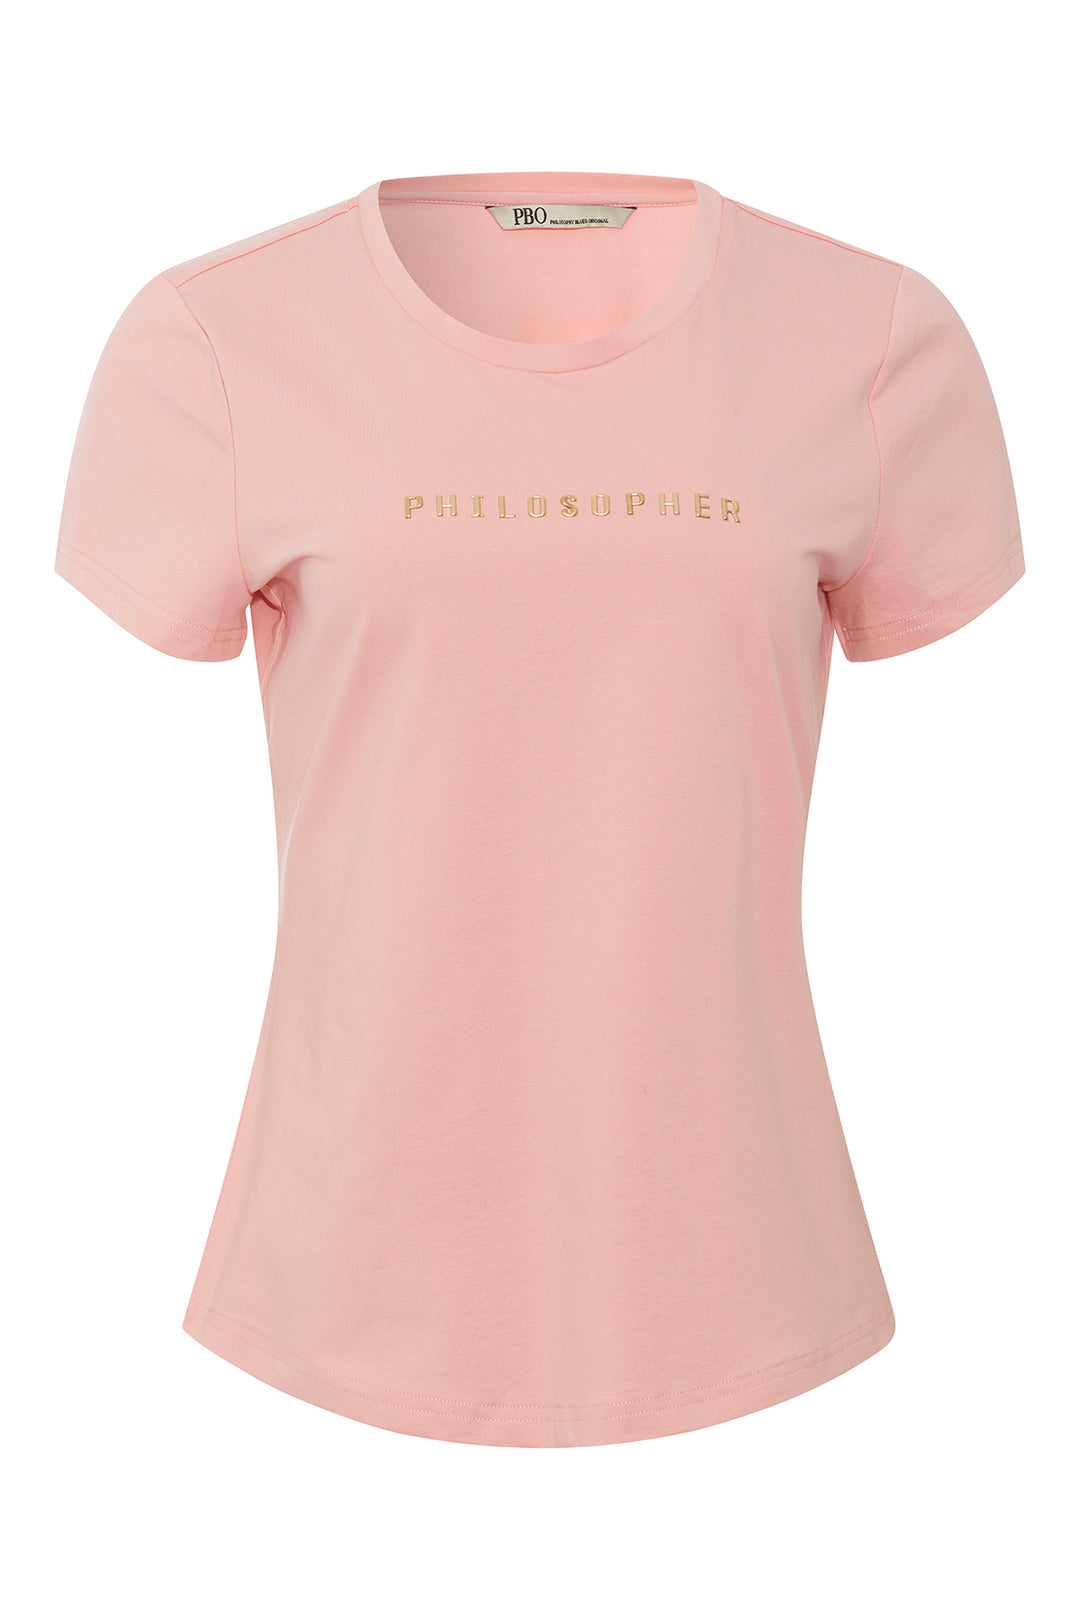 PBO Philosopher T-shirt T-SHIRTS 312 Rose